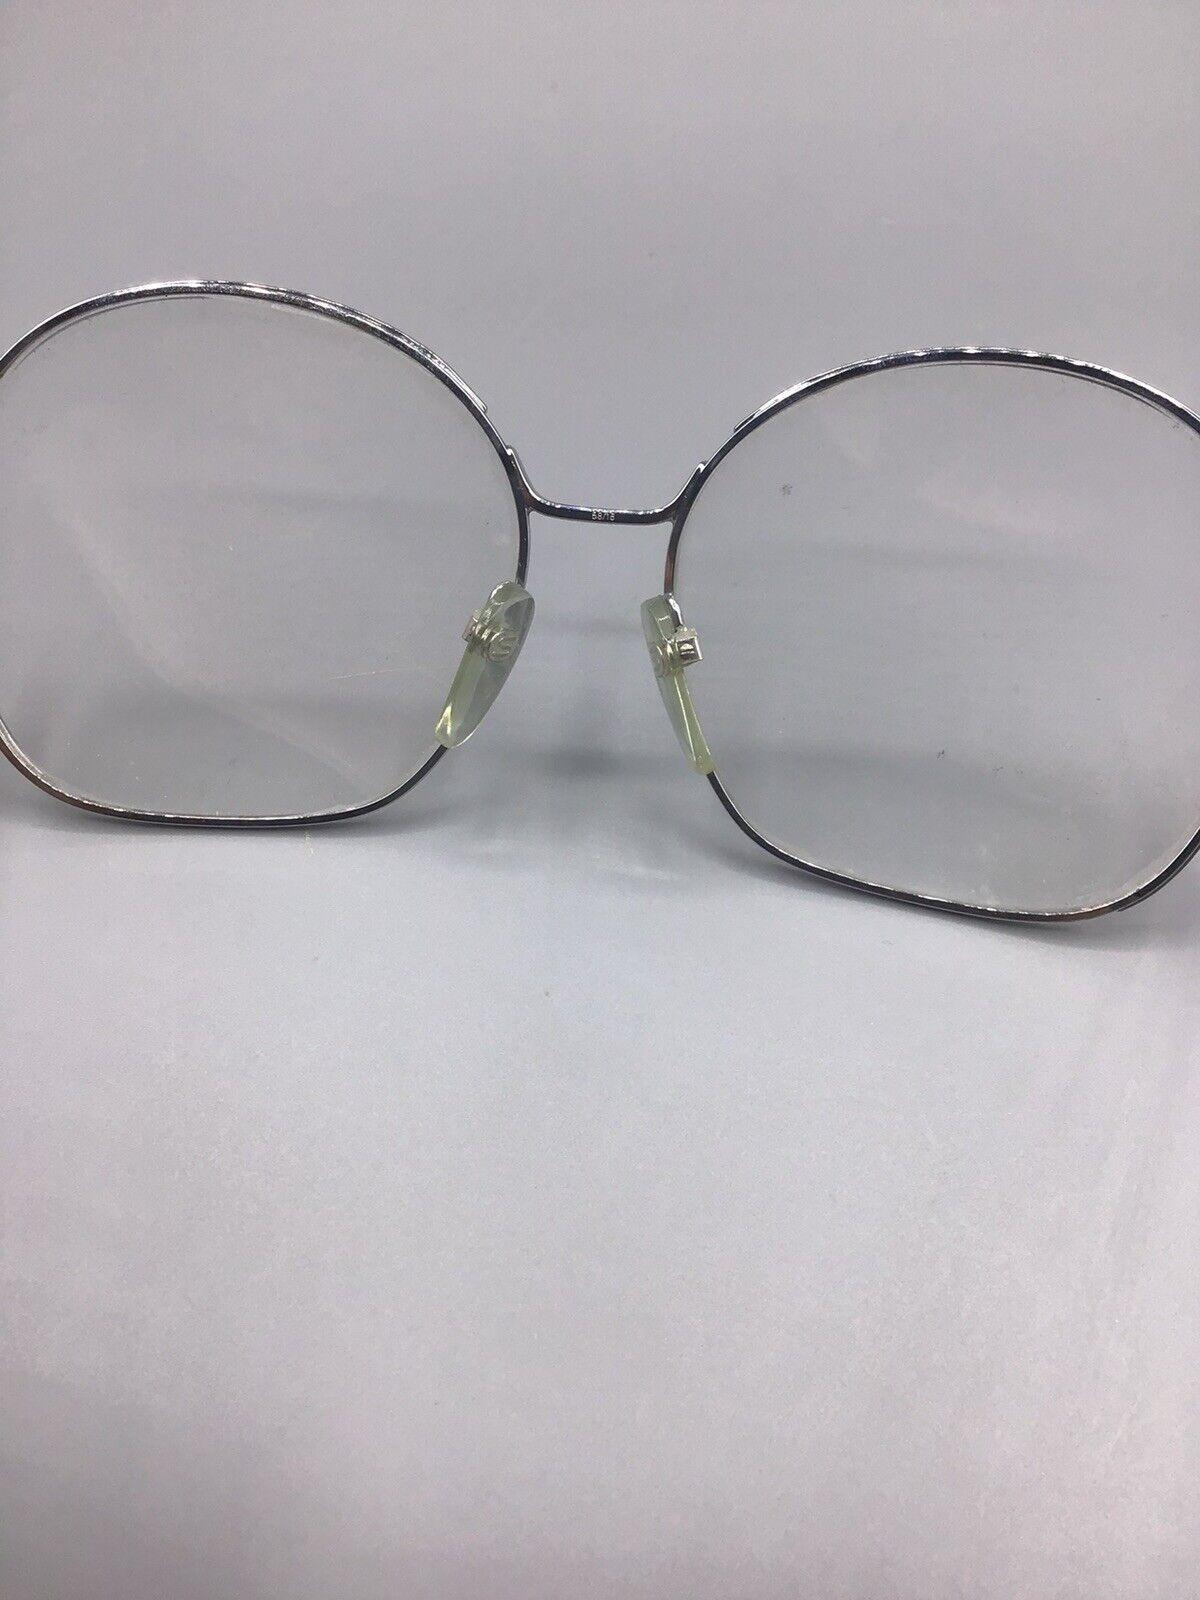 Silhouette Eyewear Glasses Occhiale Vintage Frame Brillen model 432